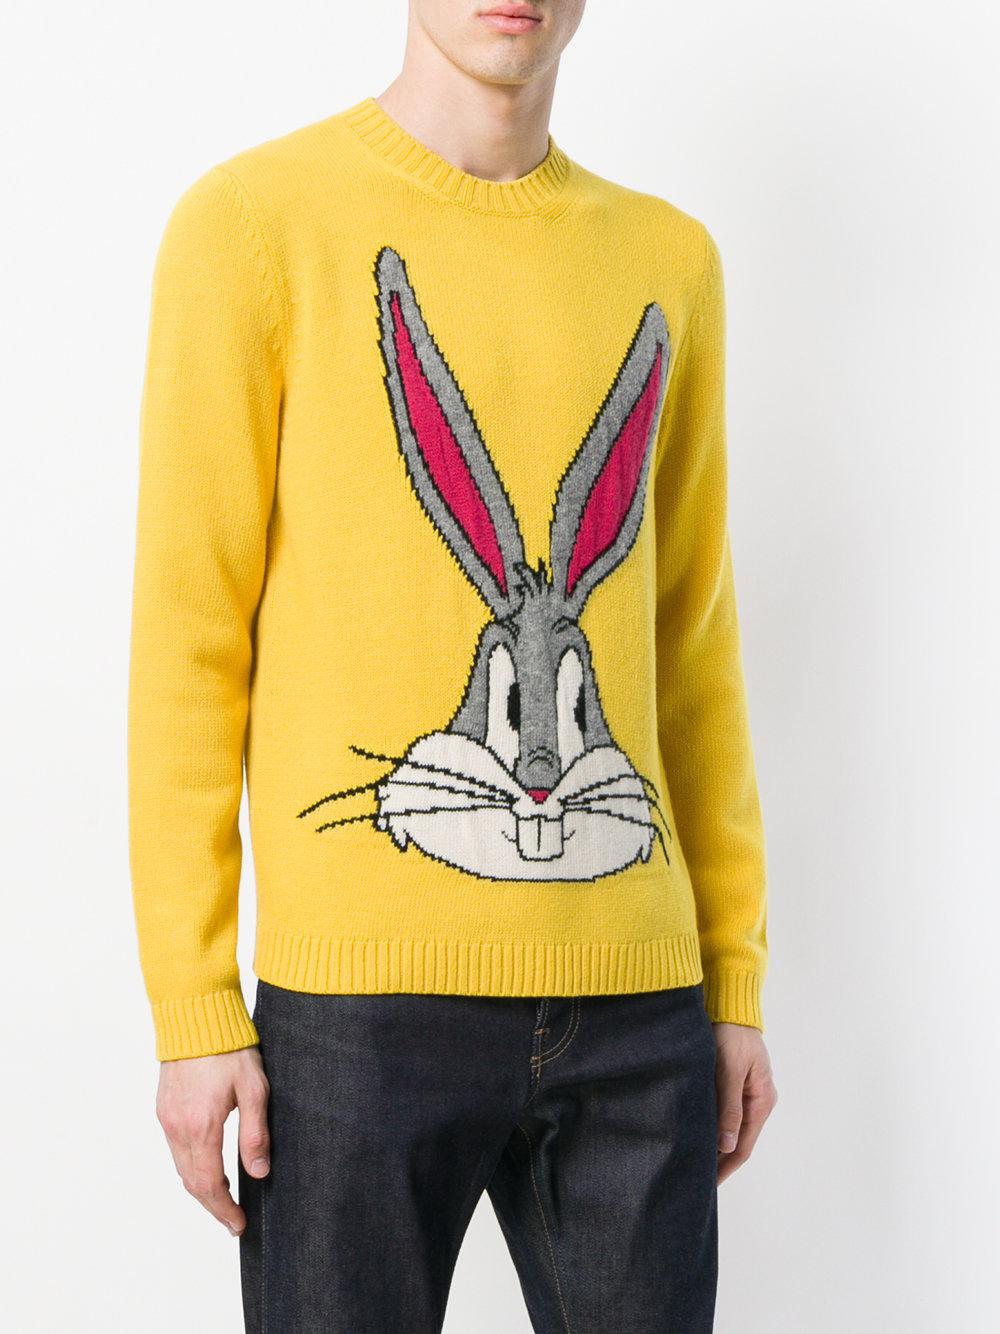 gucci bunny sweater